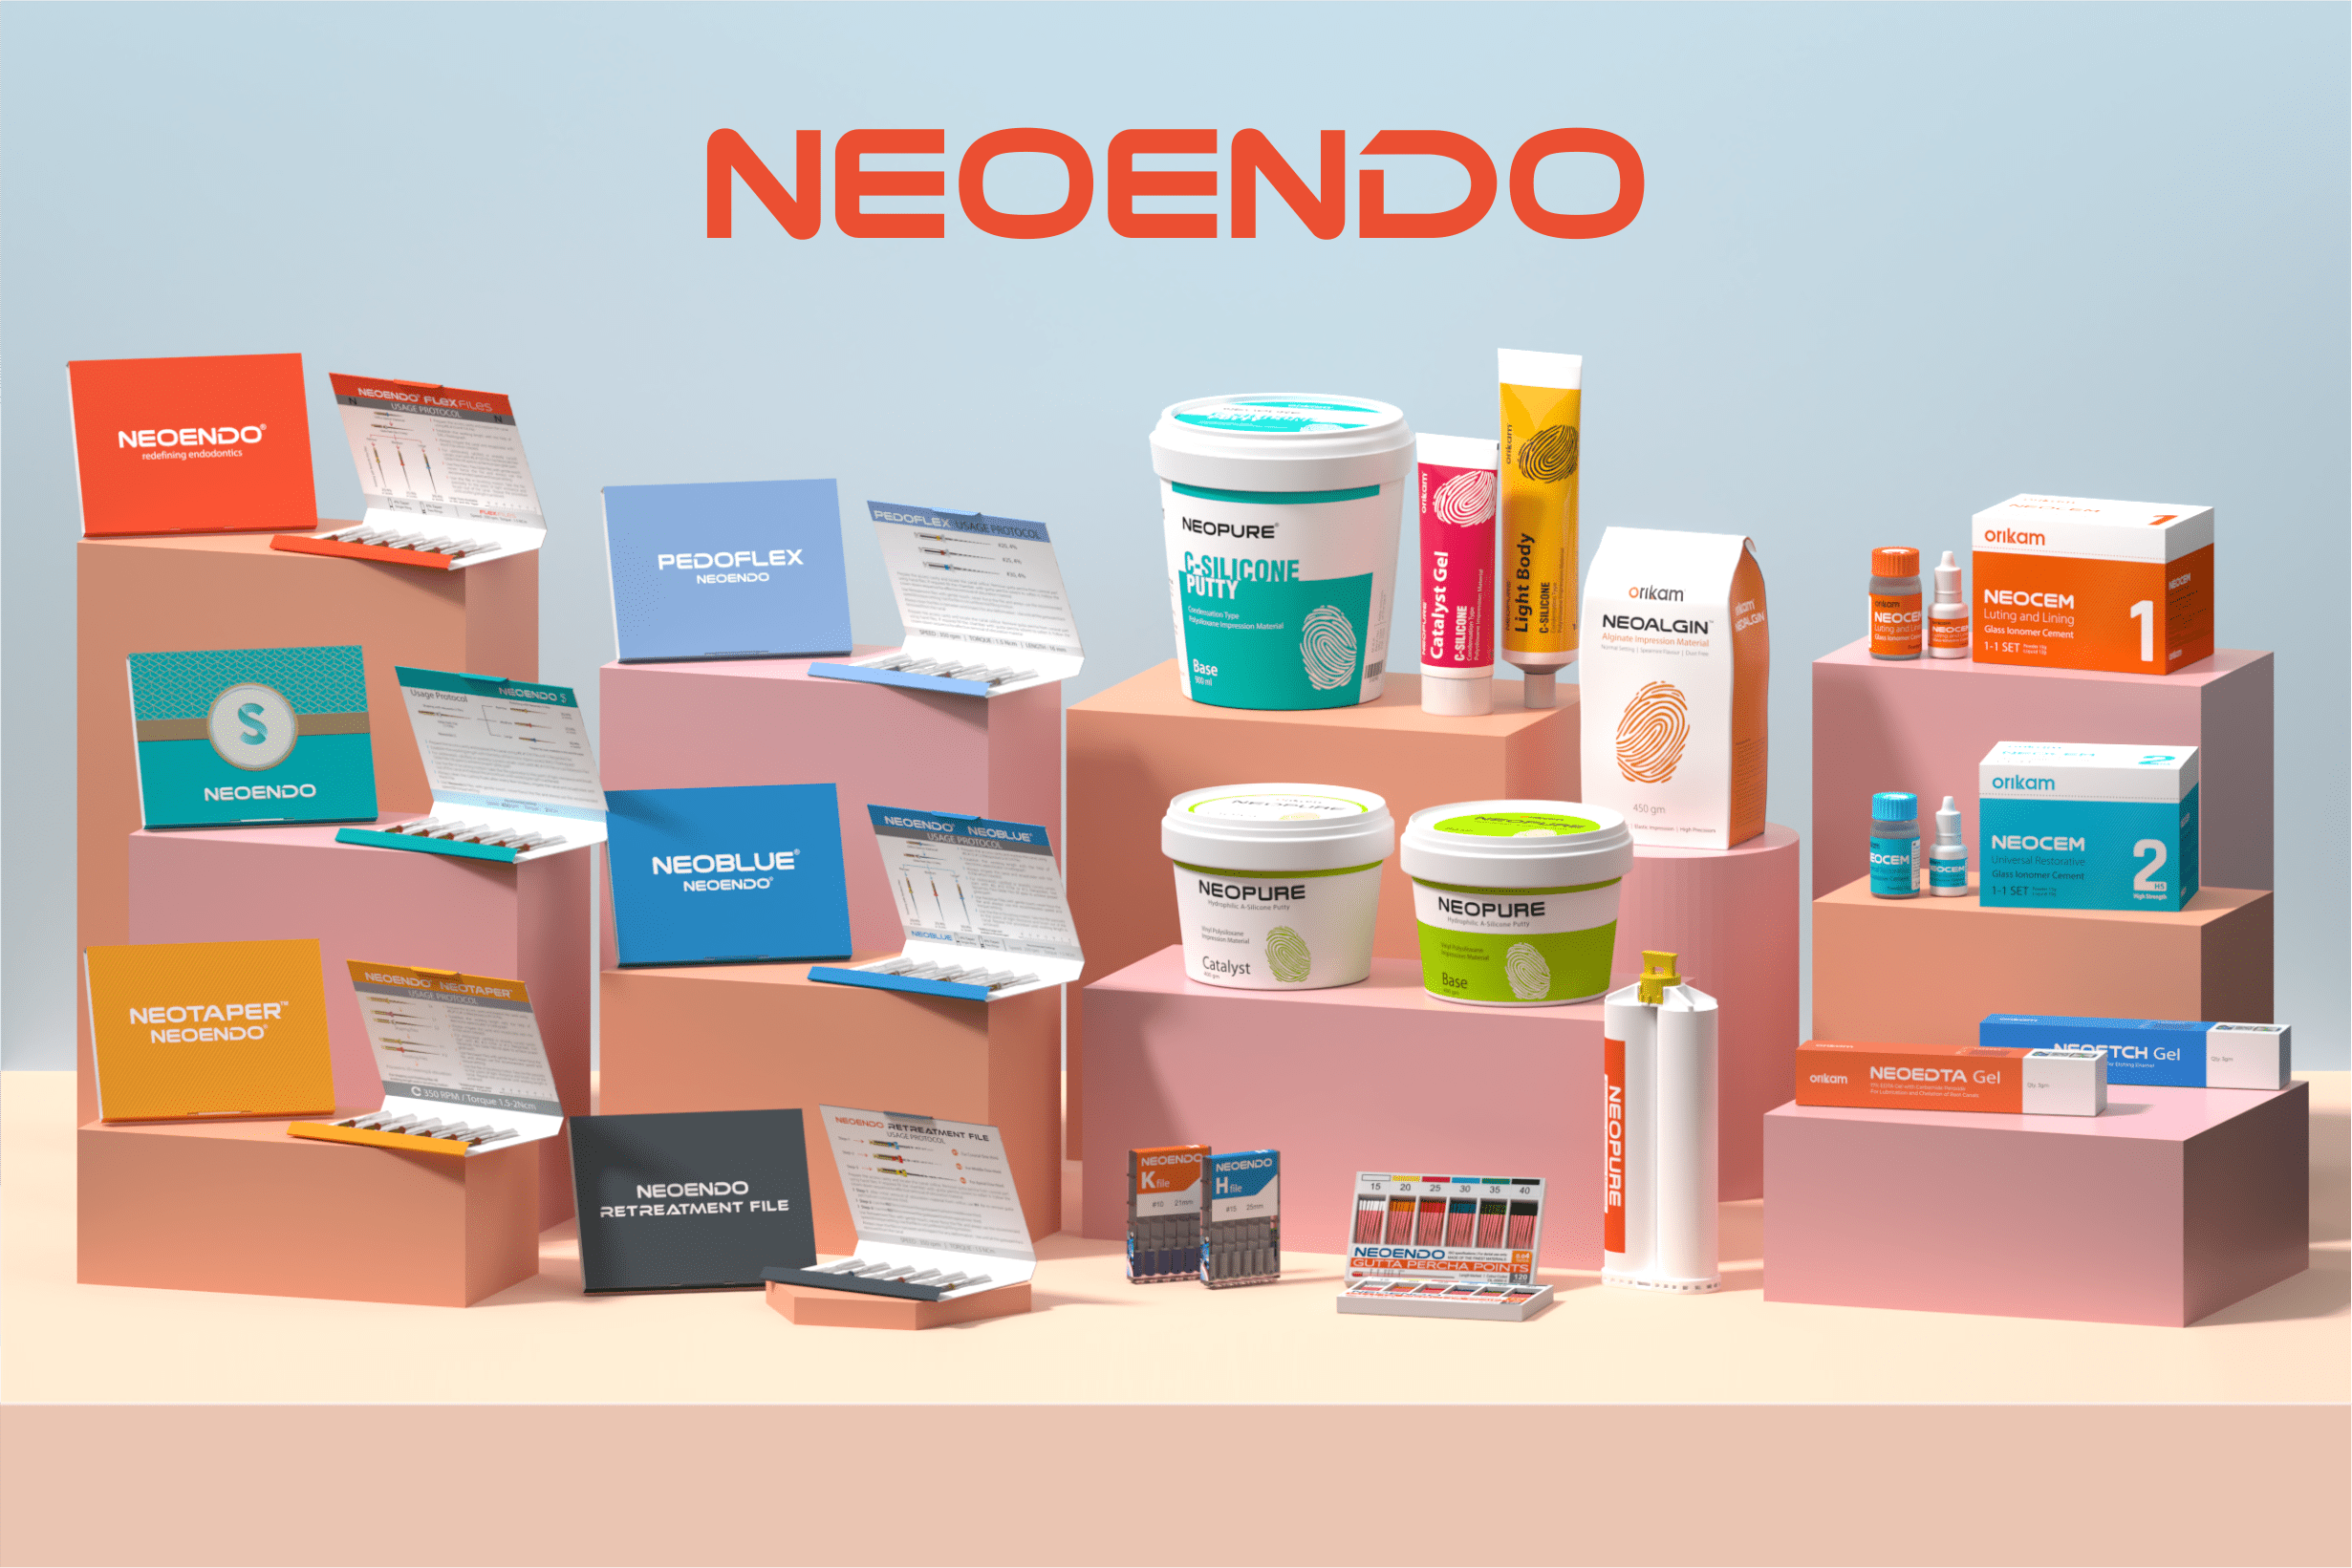 Neoendo Range of Products